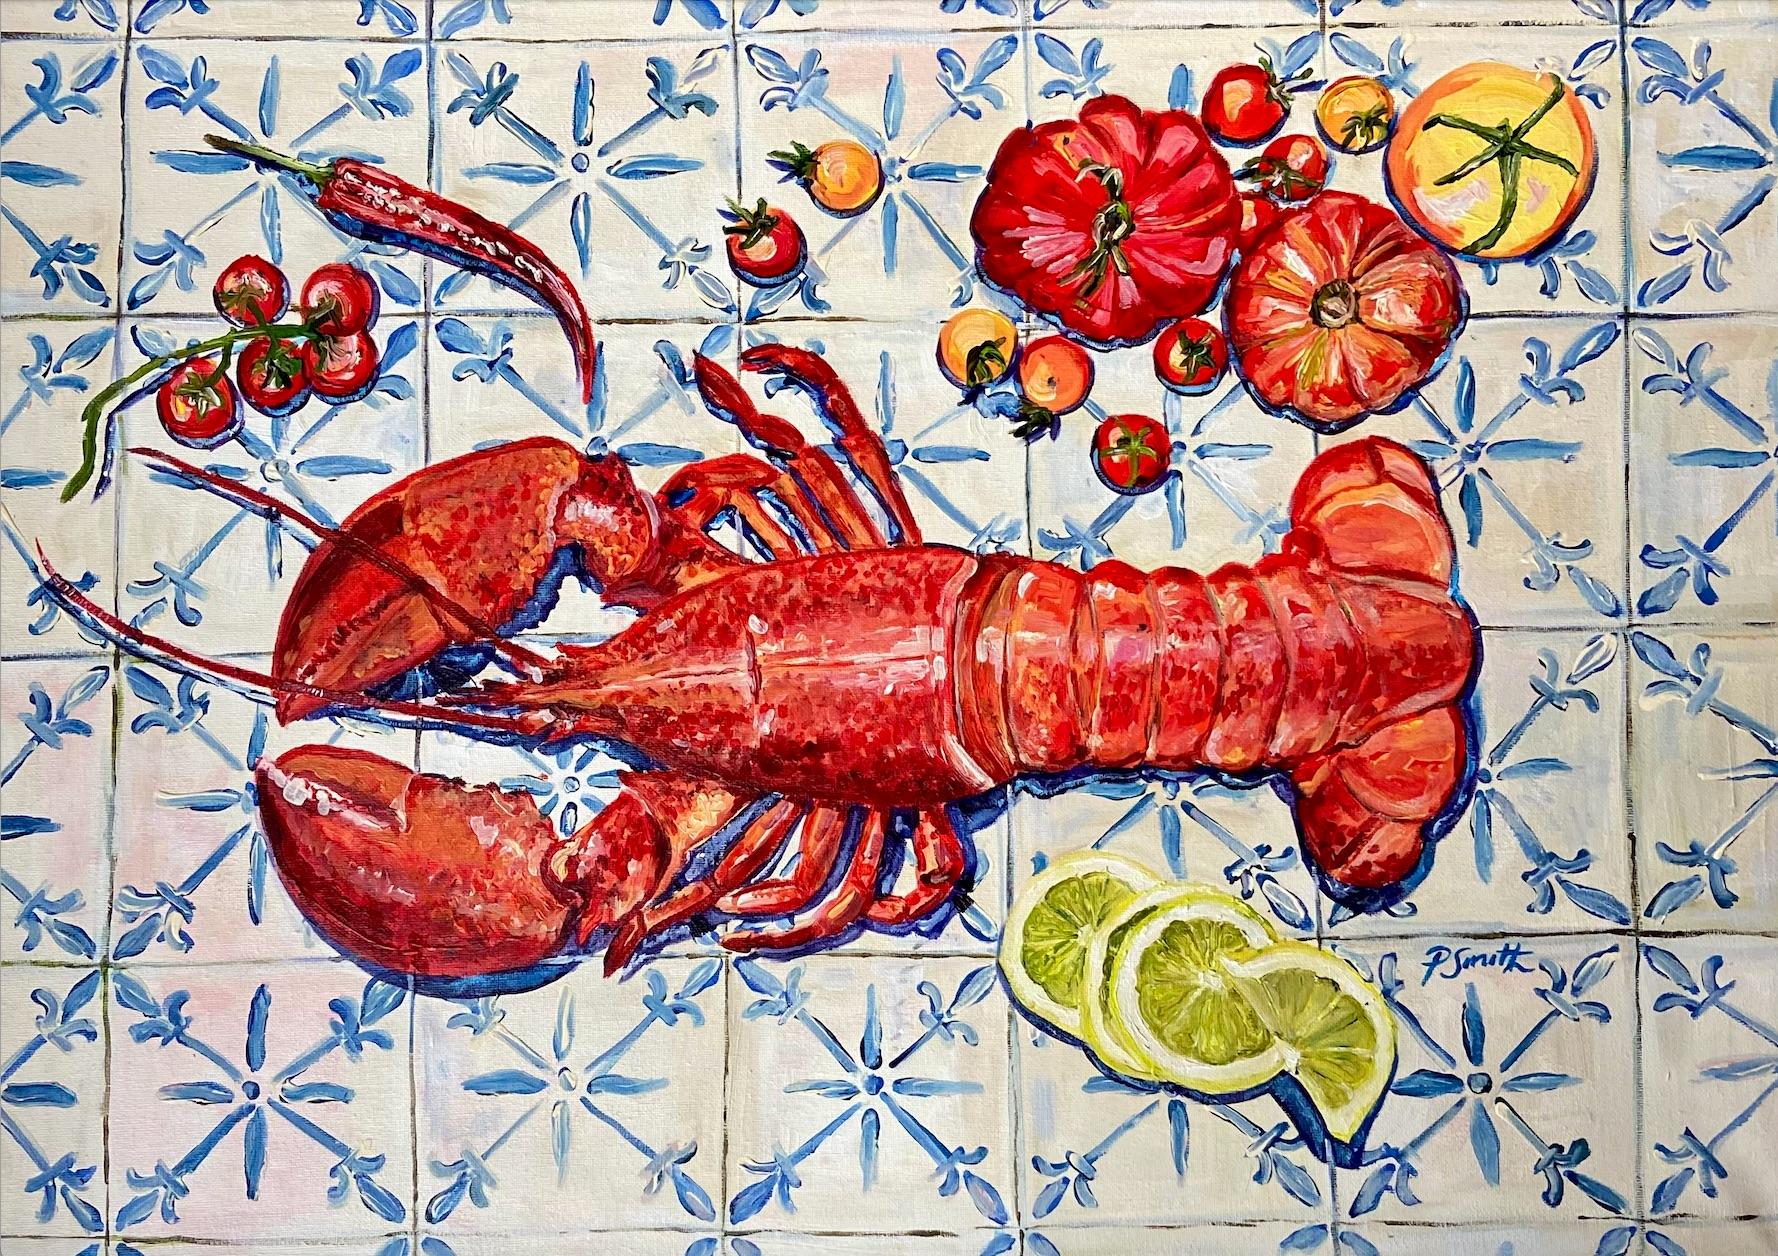 The Italian Table, Lobster, Original painting, Food art, Seafood, Mediterranean